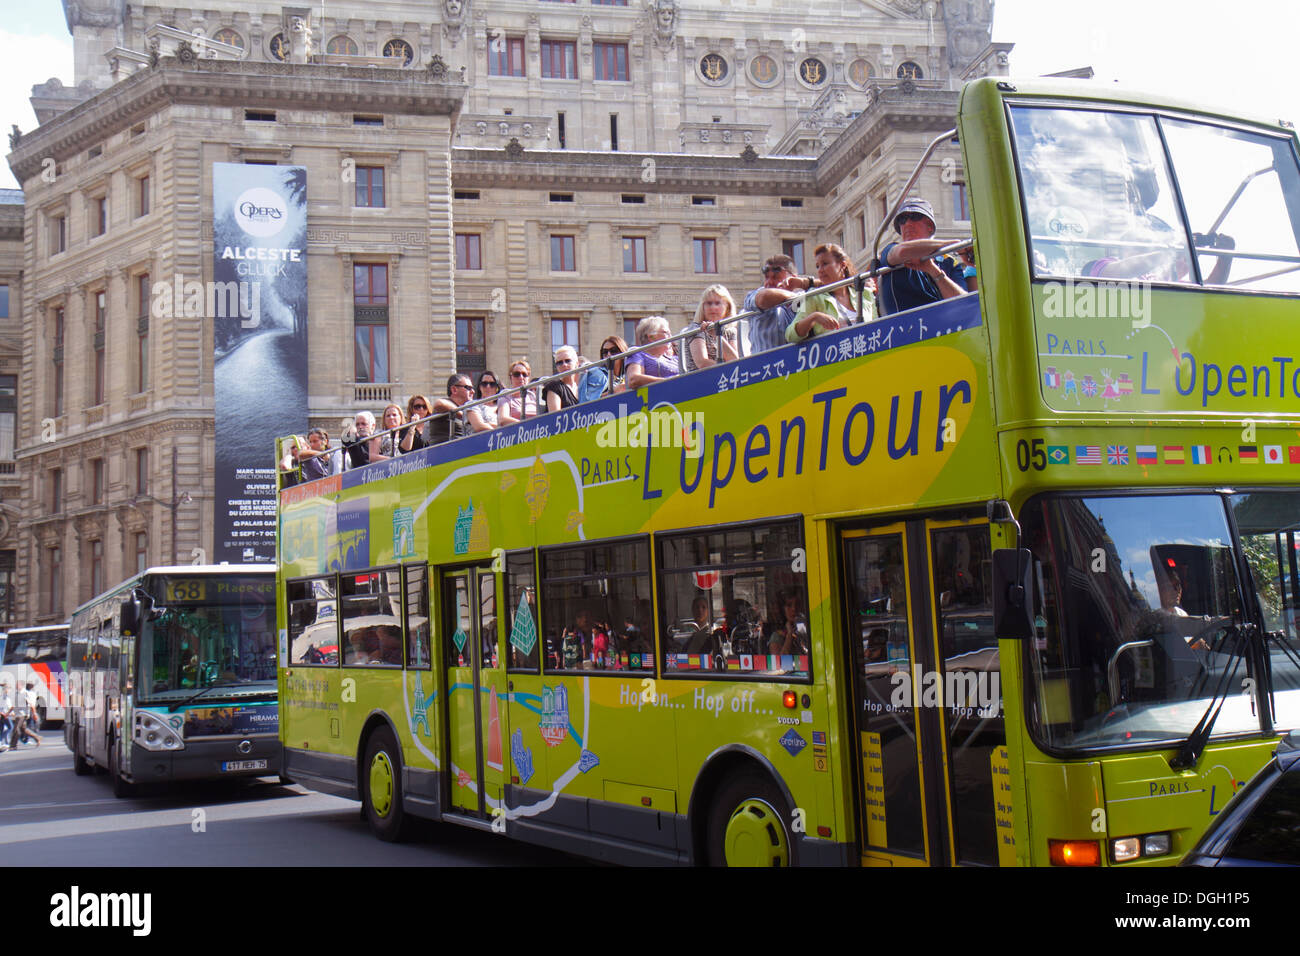 Paris Frankreich,9. Arrondissement,Rue Scribe,Palais Garnier,Opera National de Paris,Reisebus,Doppeldecker,L Opentour,Frankreich130814091 Stockfoto